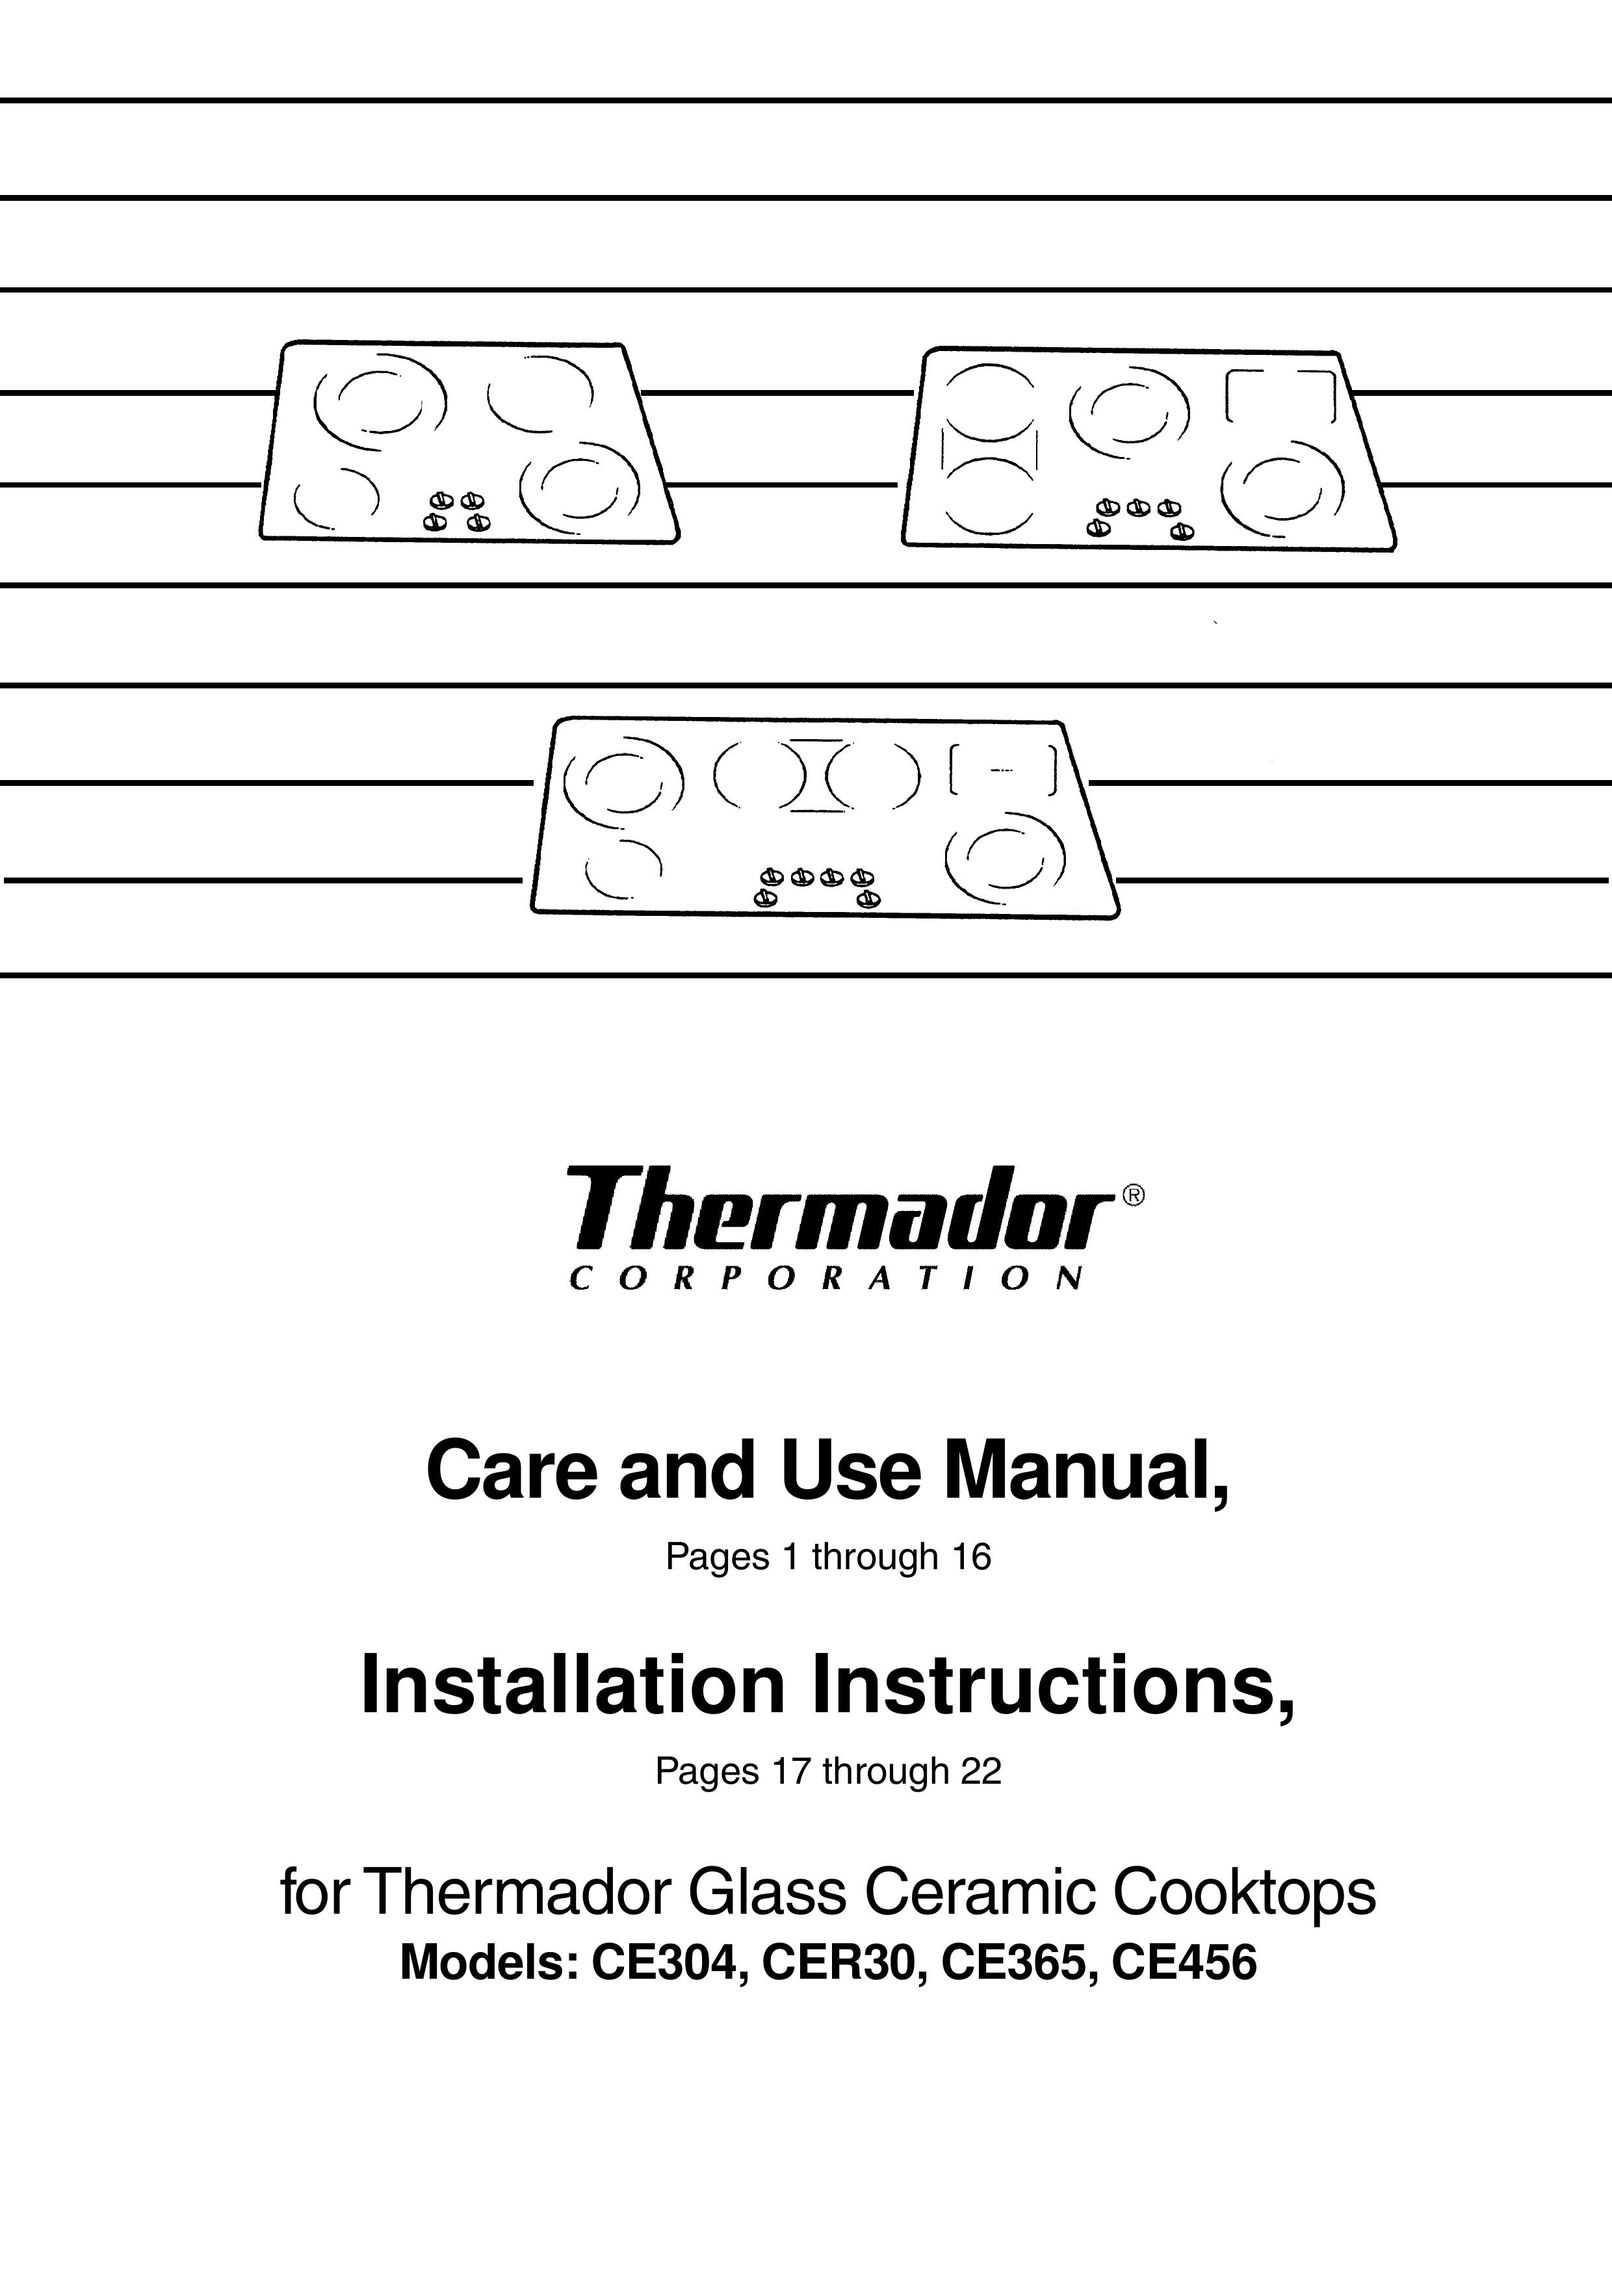 Thermador CE456 Cooktop User Manual